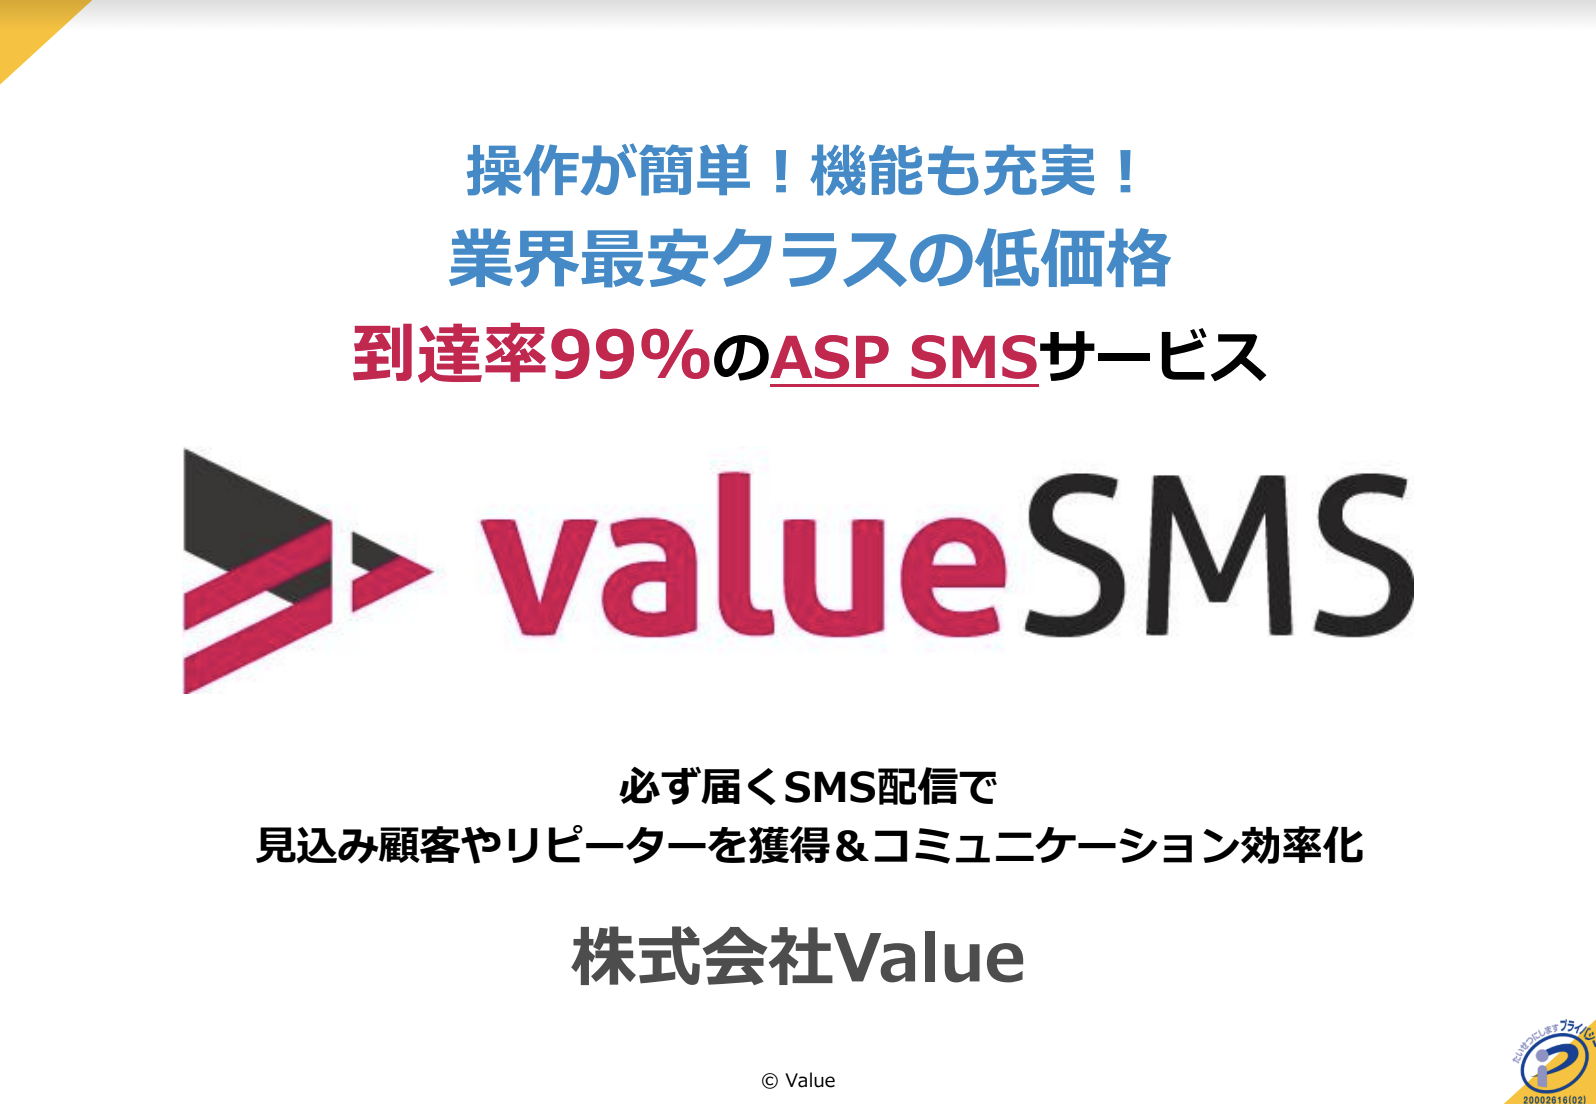 valueSMS 資料ダウンロードページ